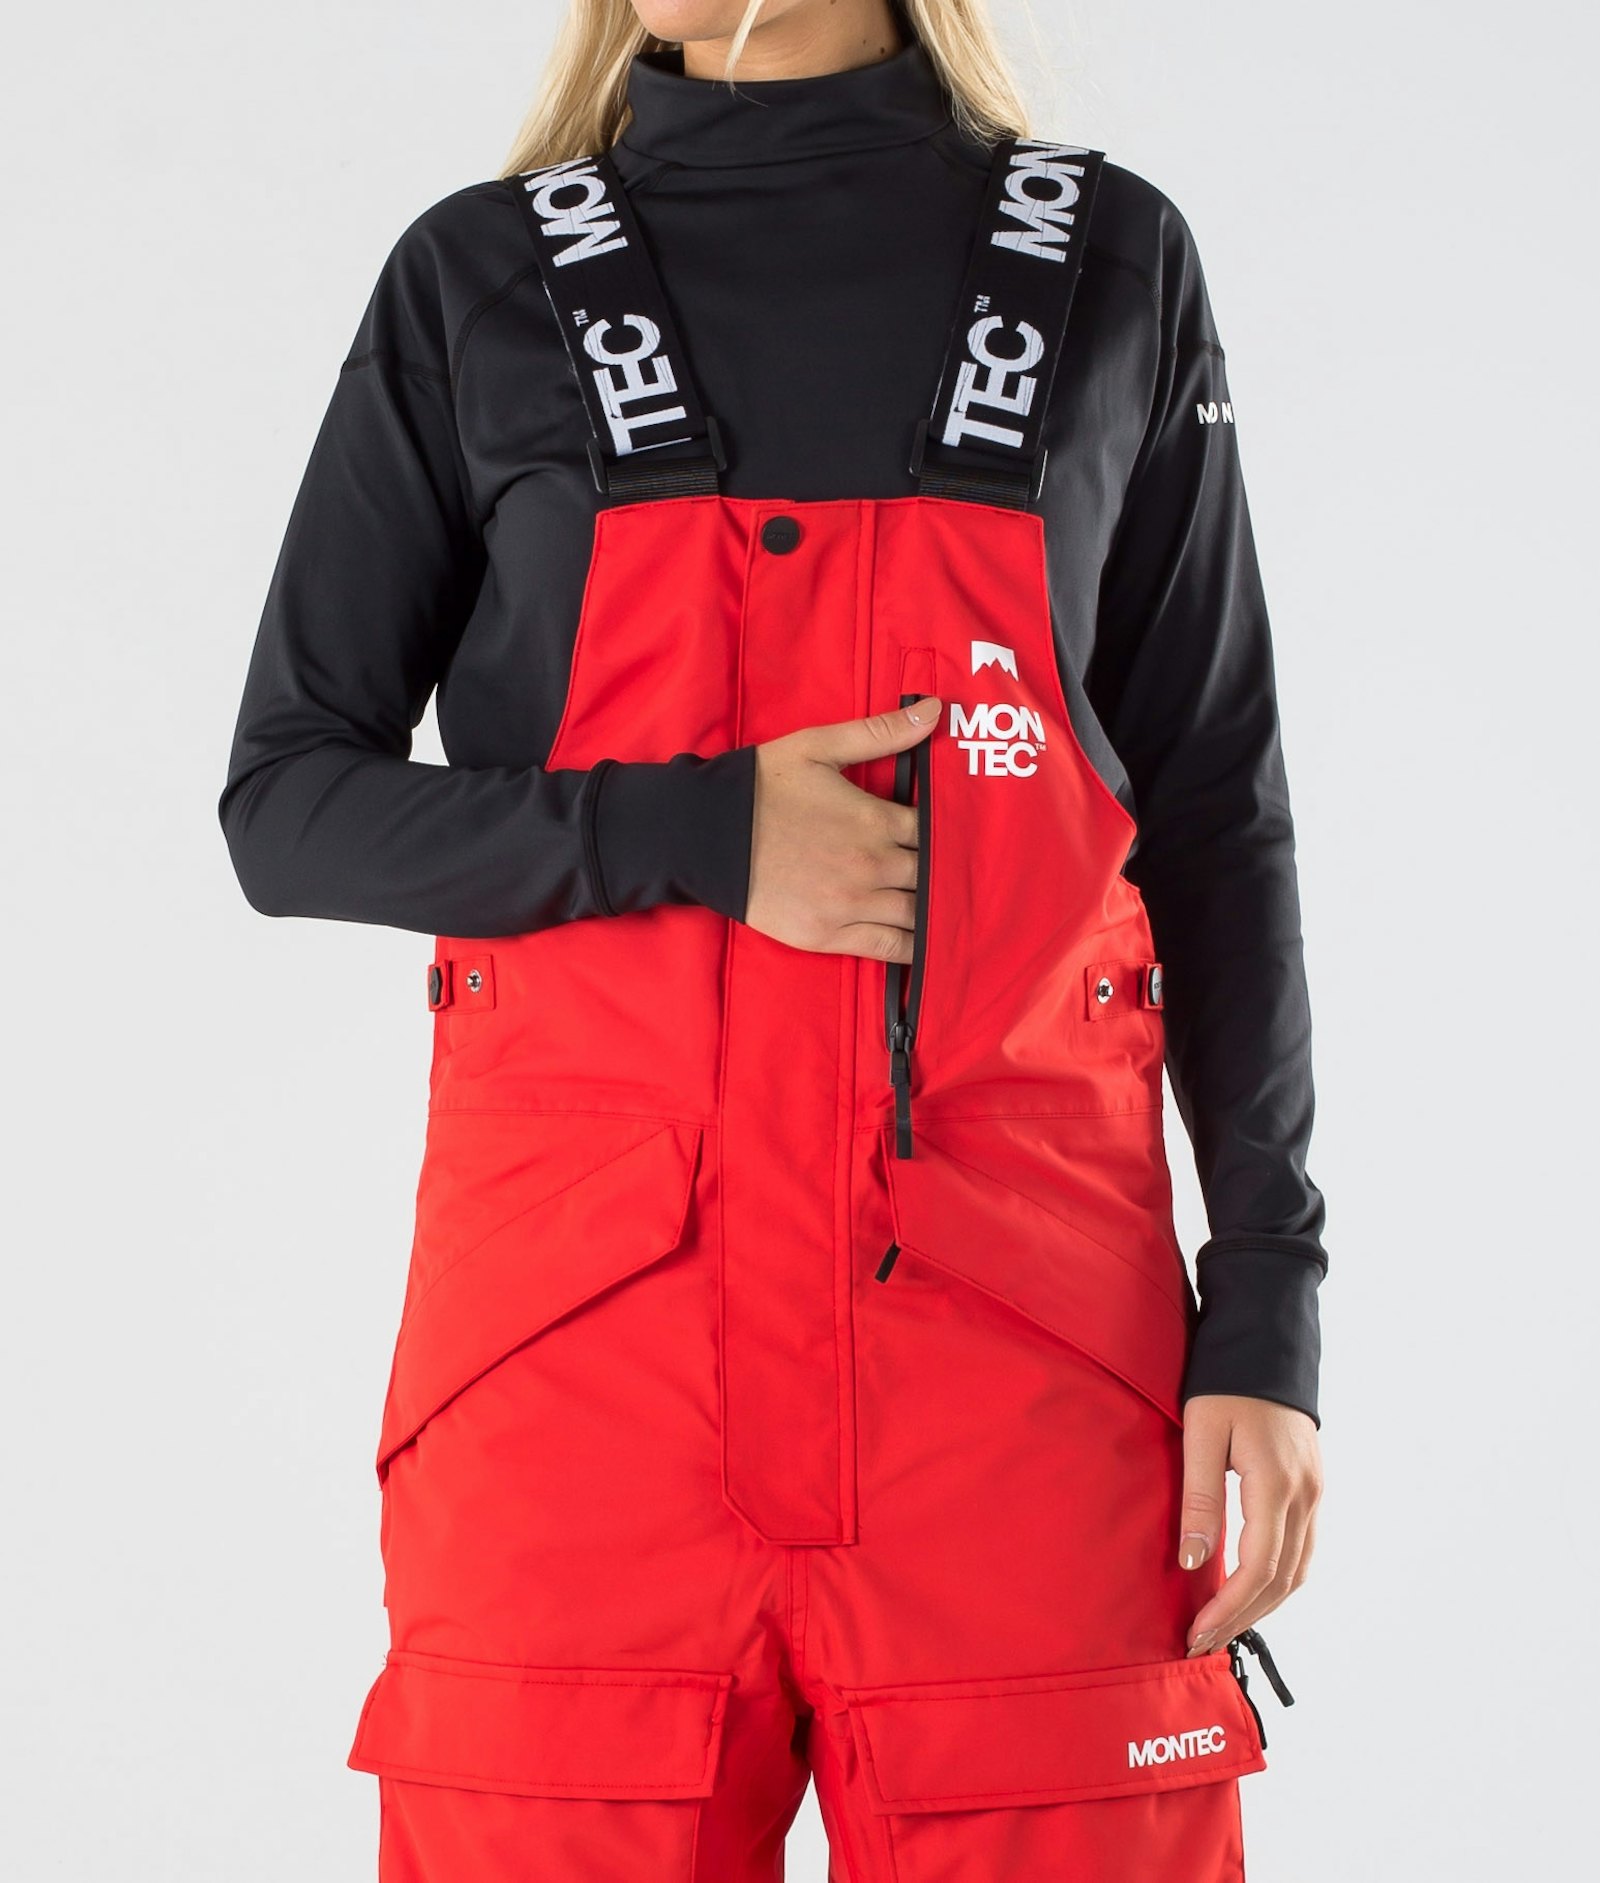 Fawk W 2019 スキーパンツ レディース Red